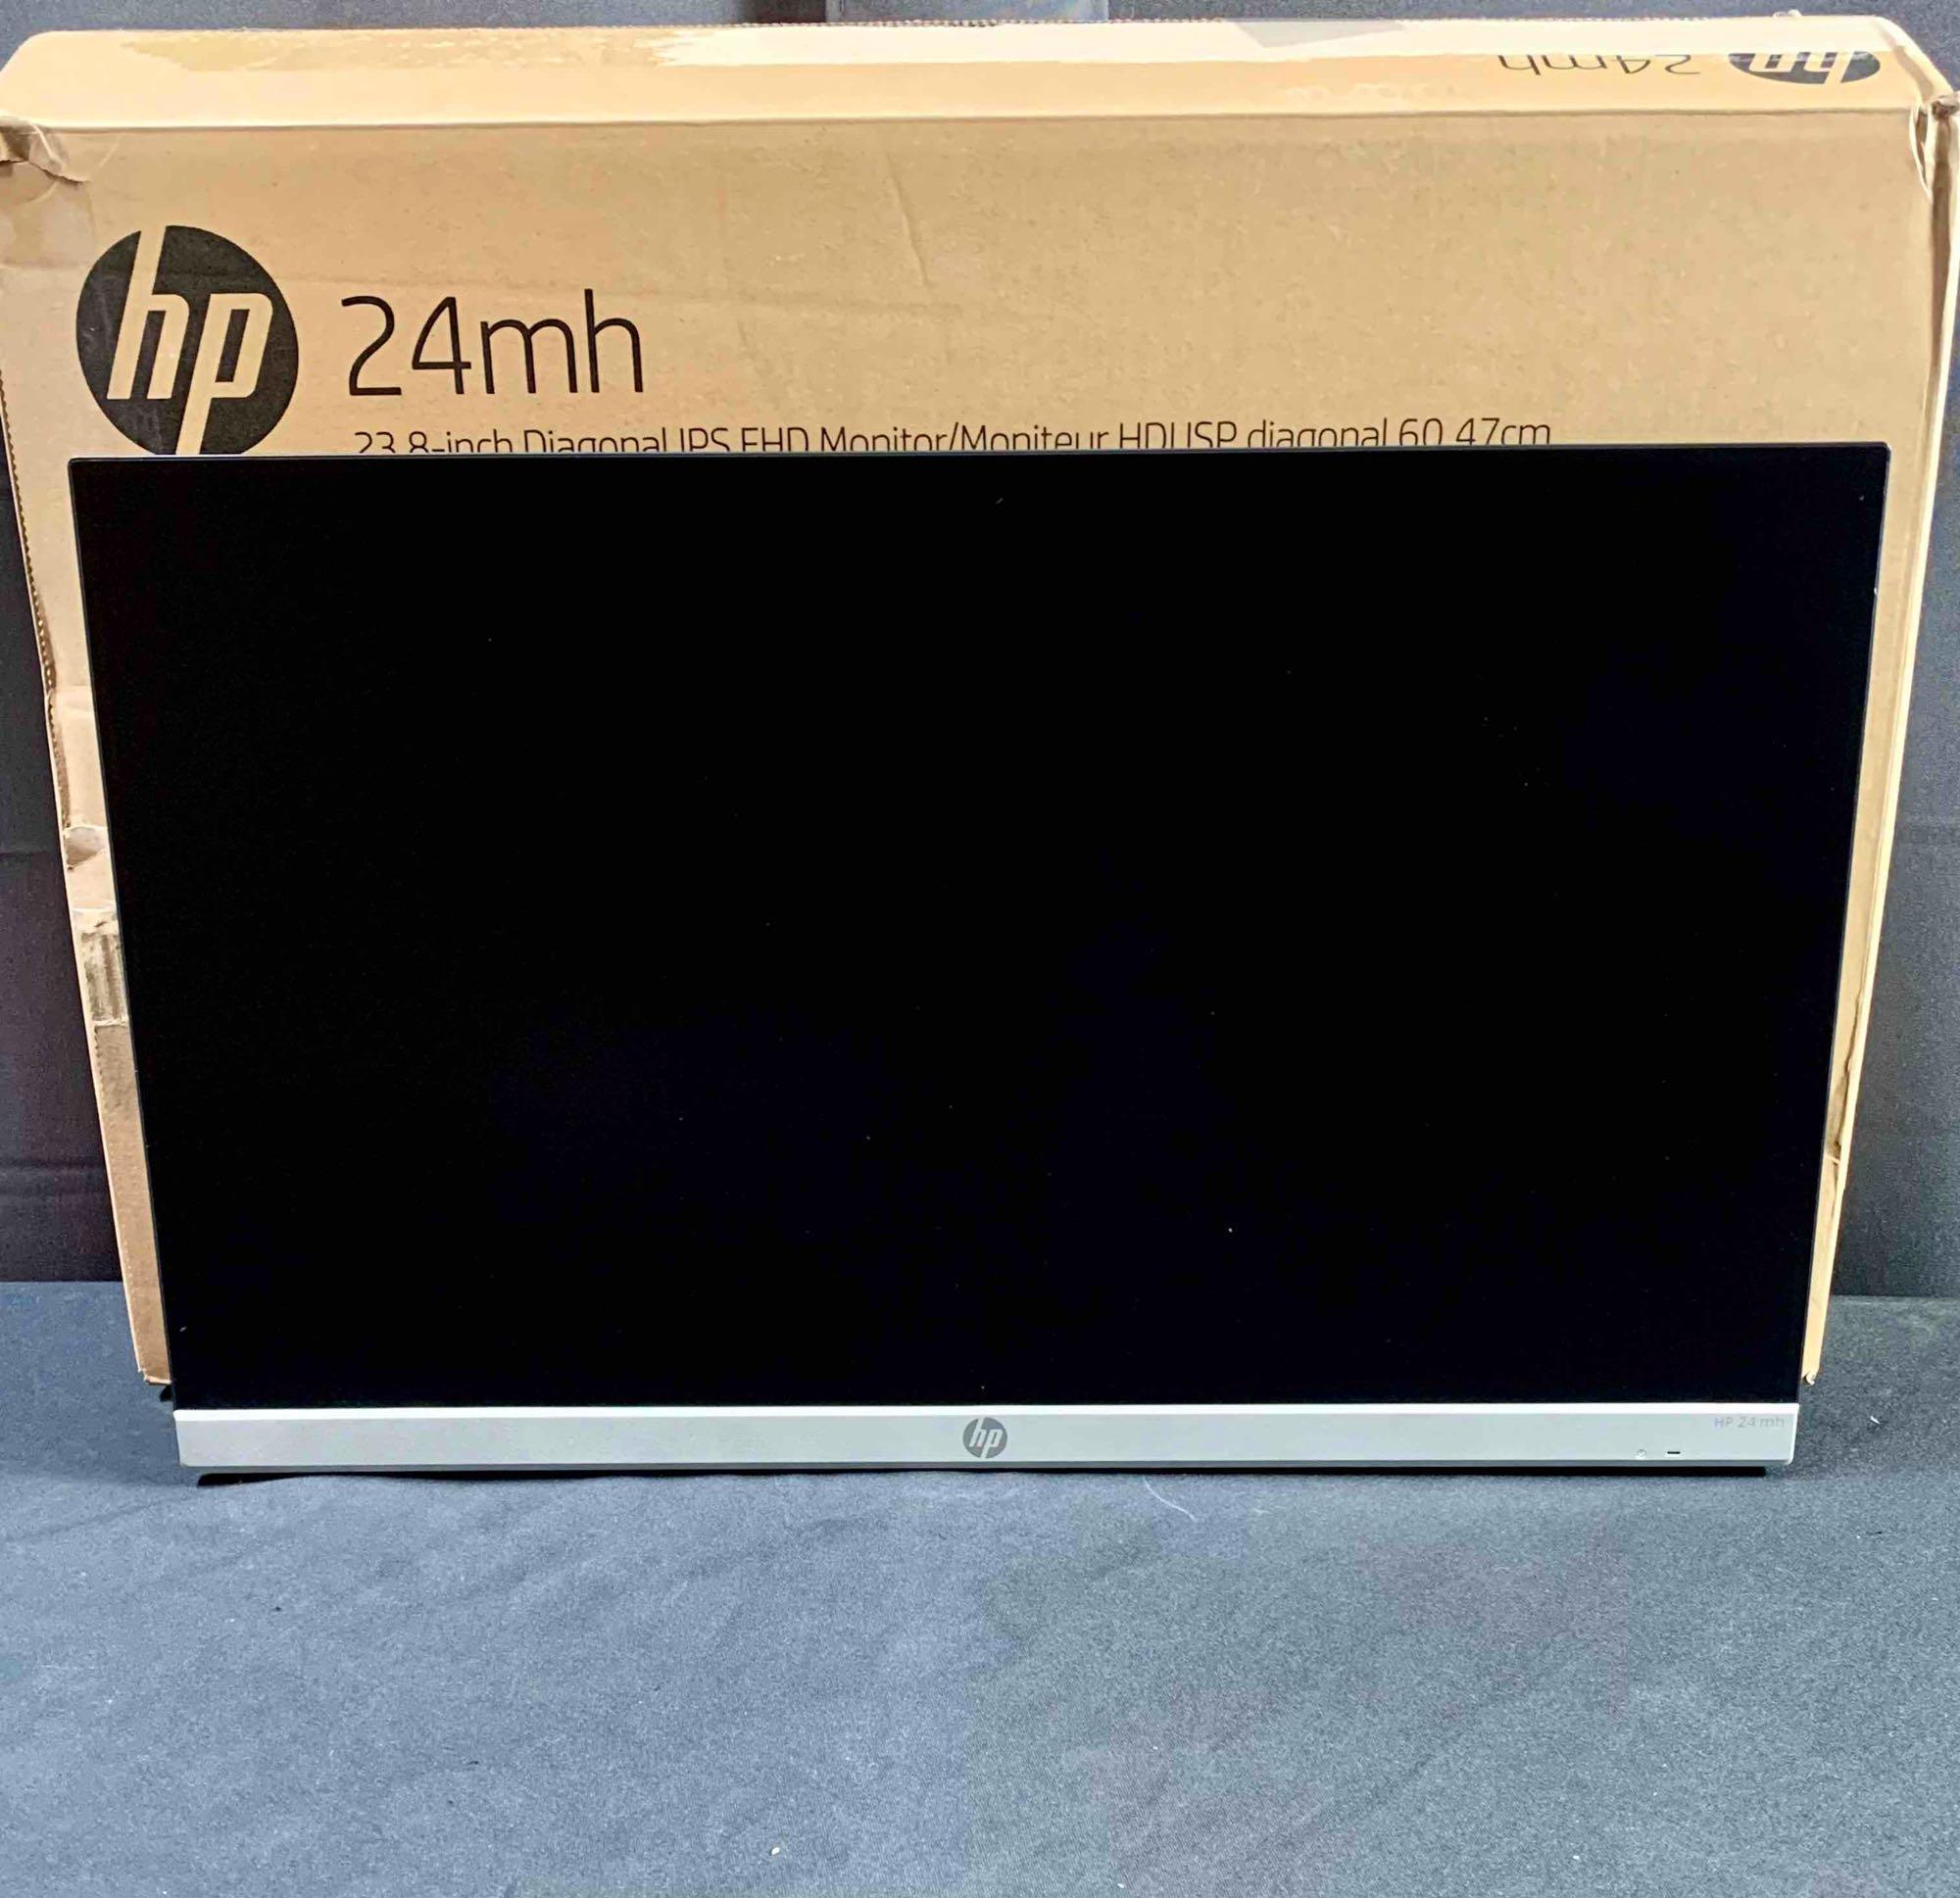 HP 24mh FHD Computer Monitor 23.8-Inch